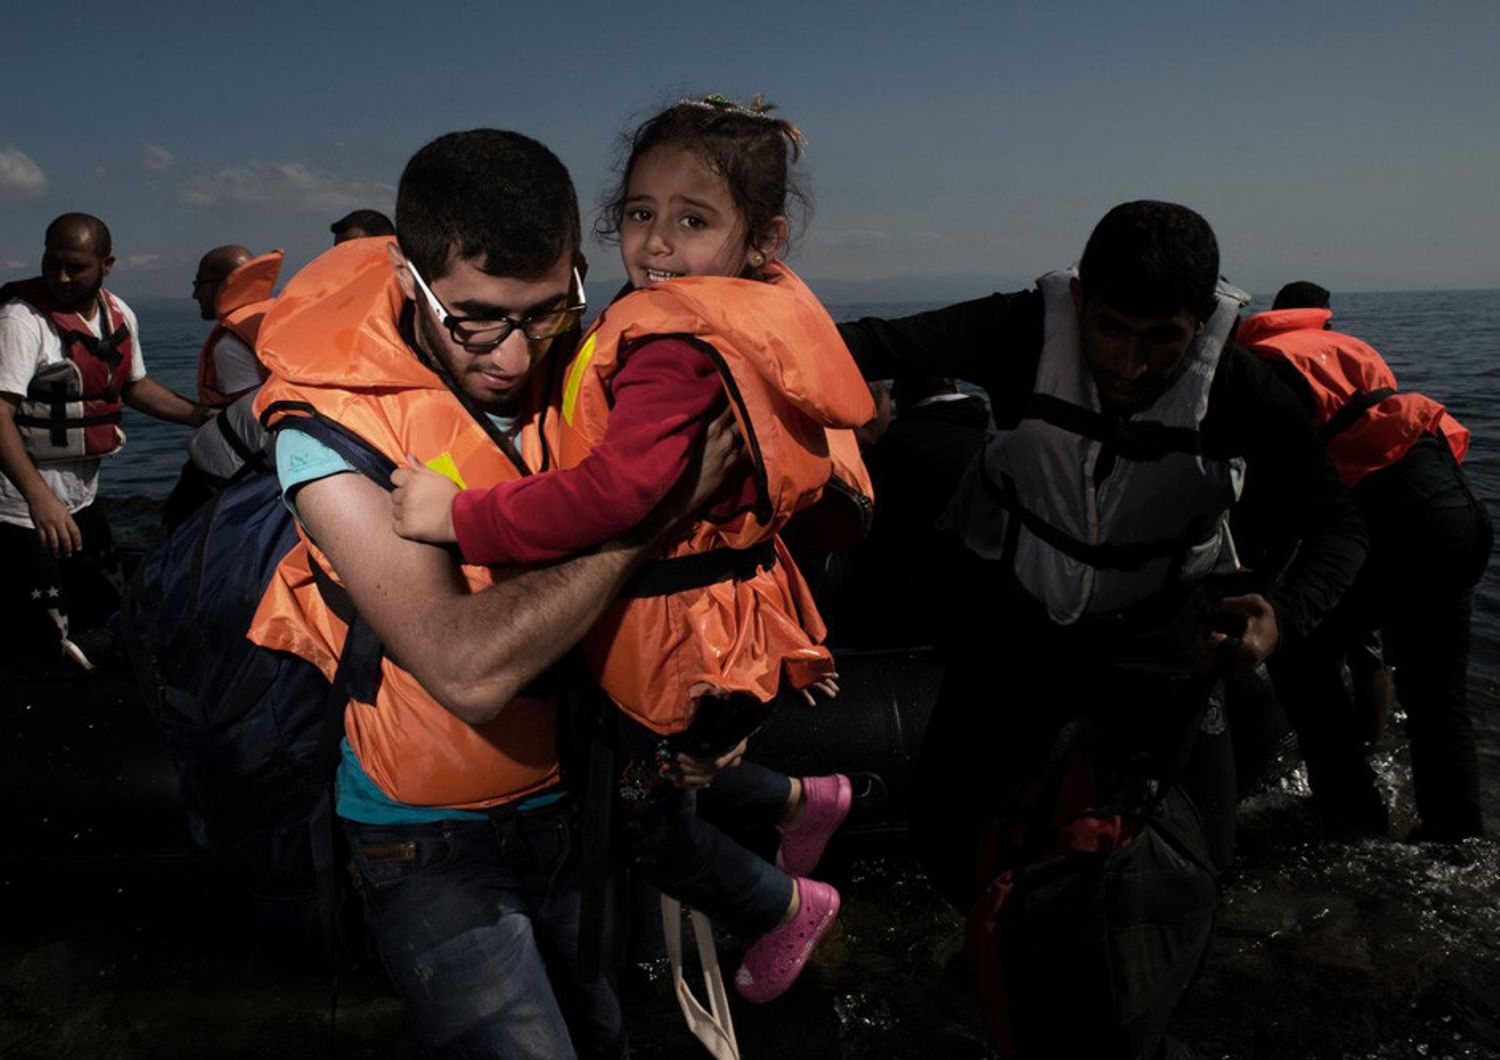 &nbsp; Unicef bambini rifugiati migranti - unicef